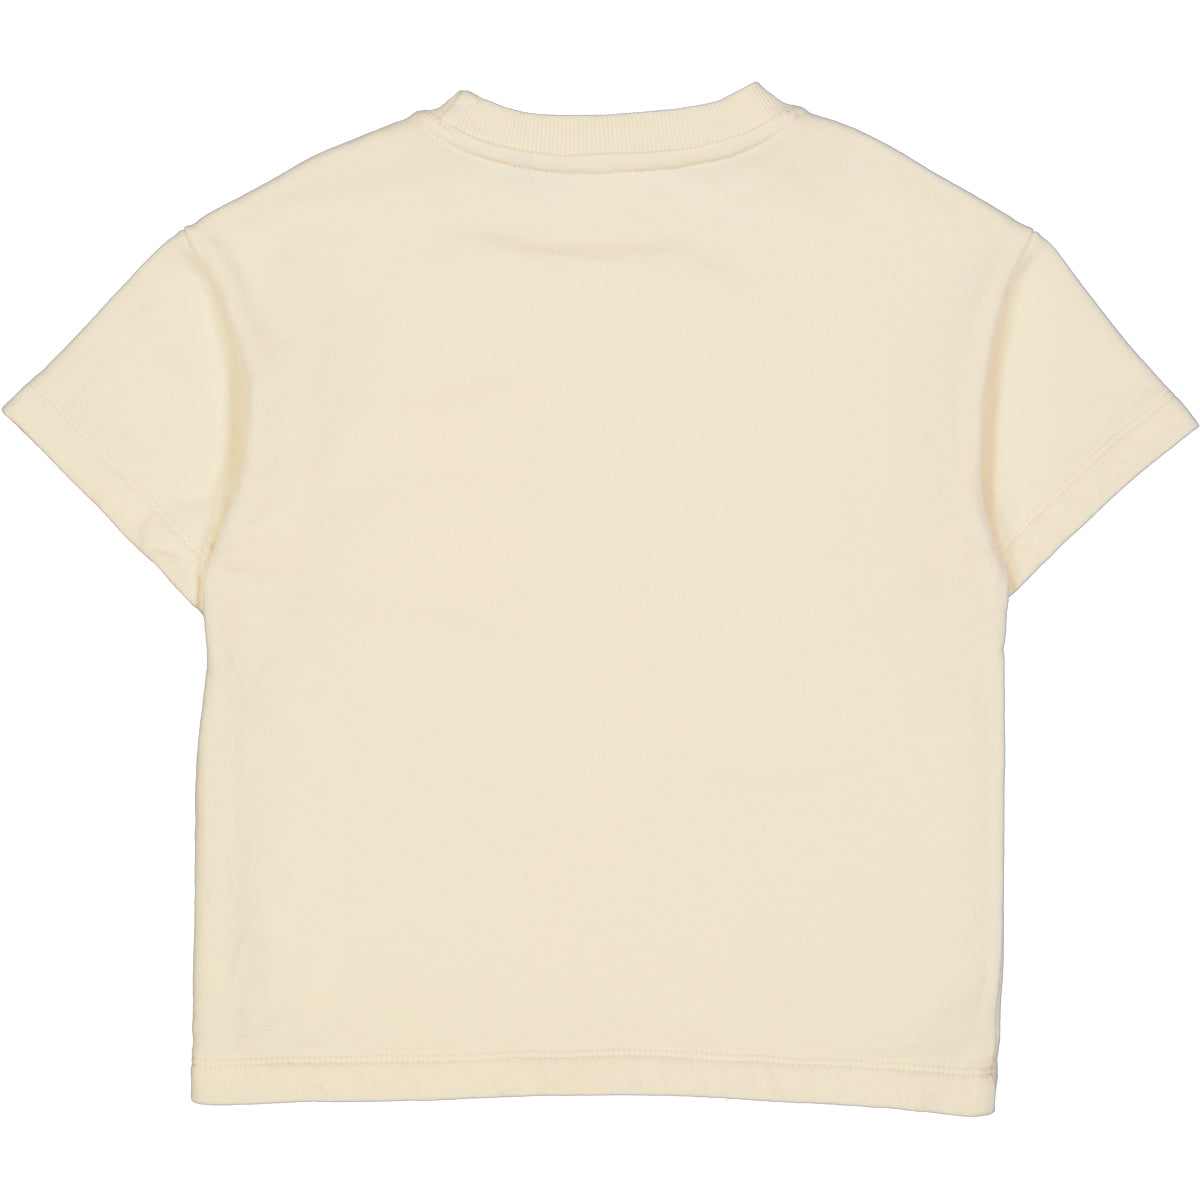 Sweat t-shirt, Ecru, Olsen kids X by Green Cotton